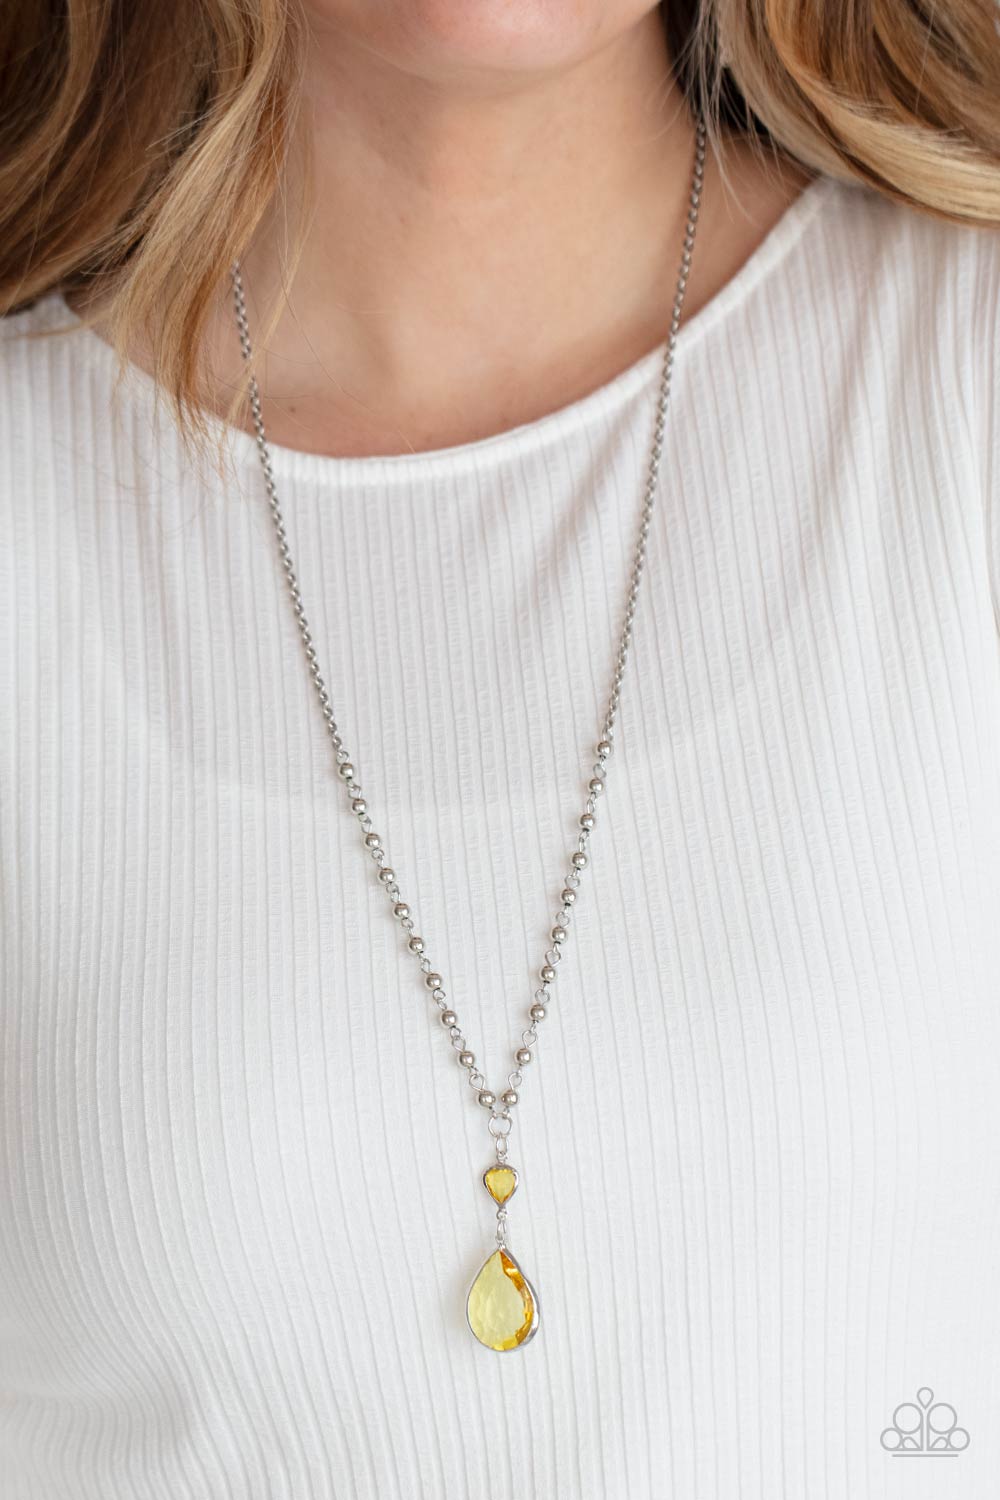 Titanic Splendor Yellow Gem Necklace - Paparazzi Accessories- lightbox - CarasShop.com - $5 Jewelry by Cara Jewels